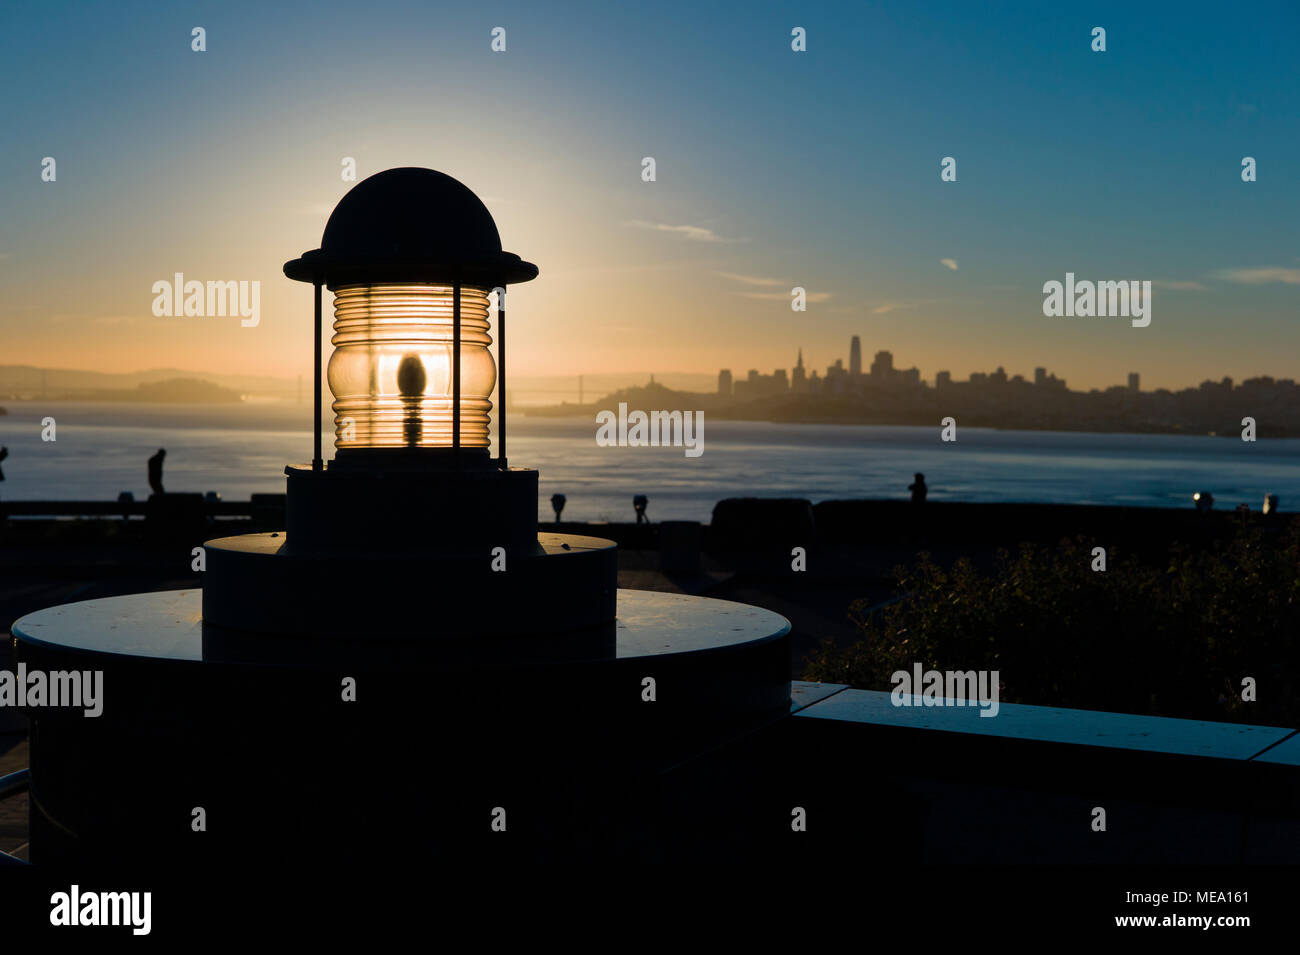 Lantern illuminated by the rising sun Vista Point Marin County Golden Gate San Francisco California USA Stock Photo